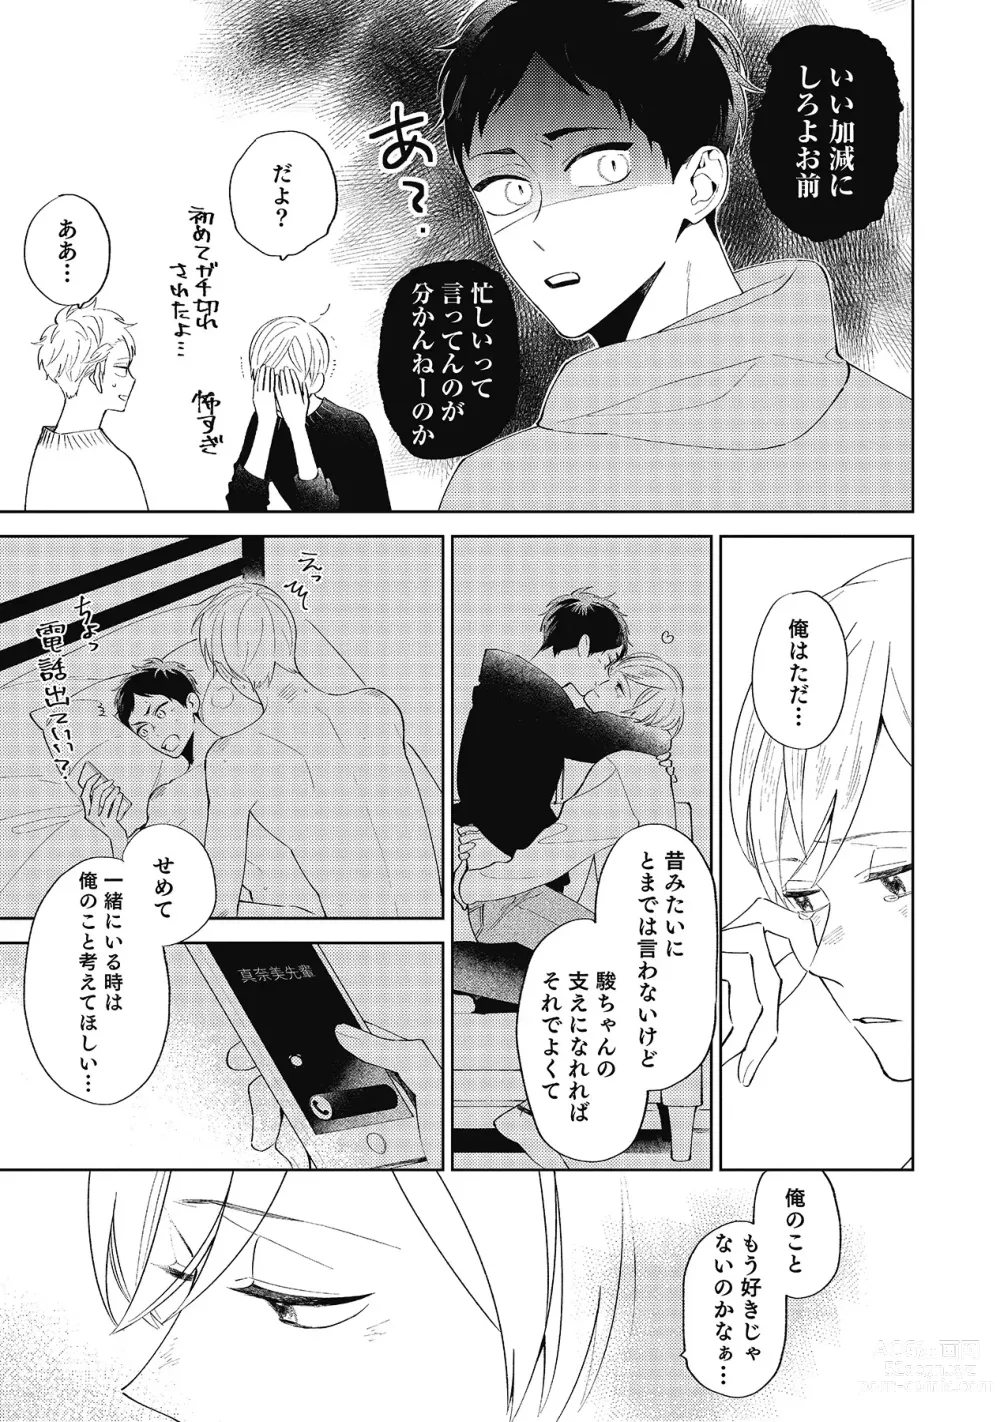 Page 21 of manga Sentimental Darling